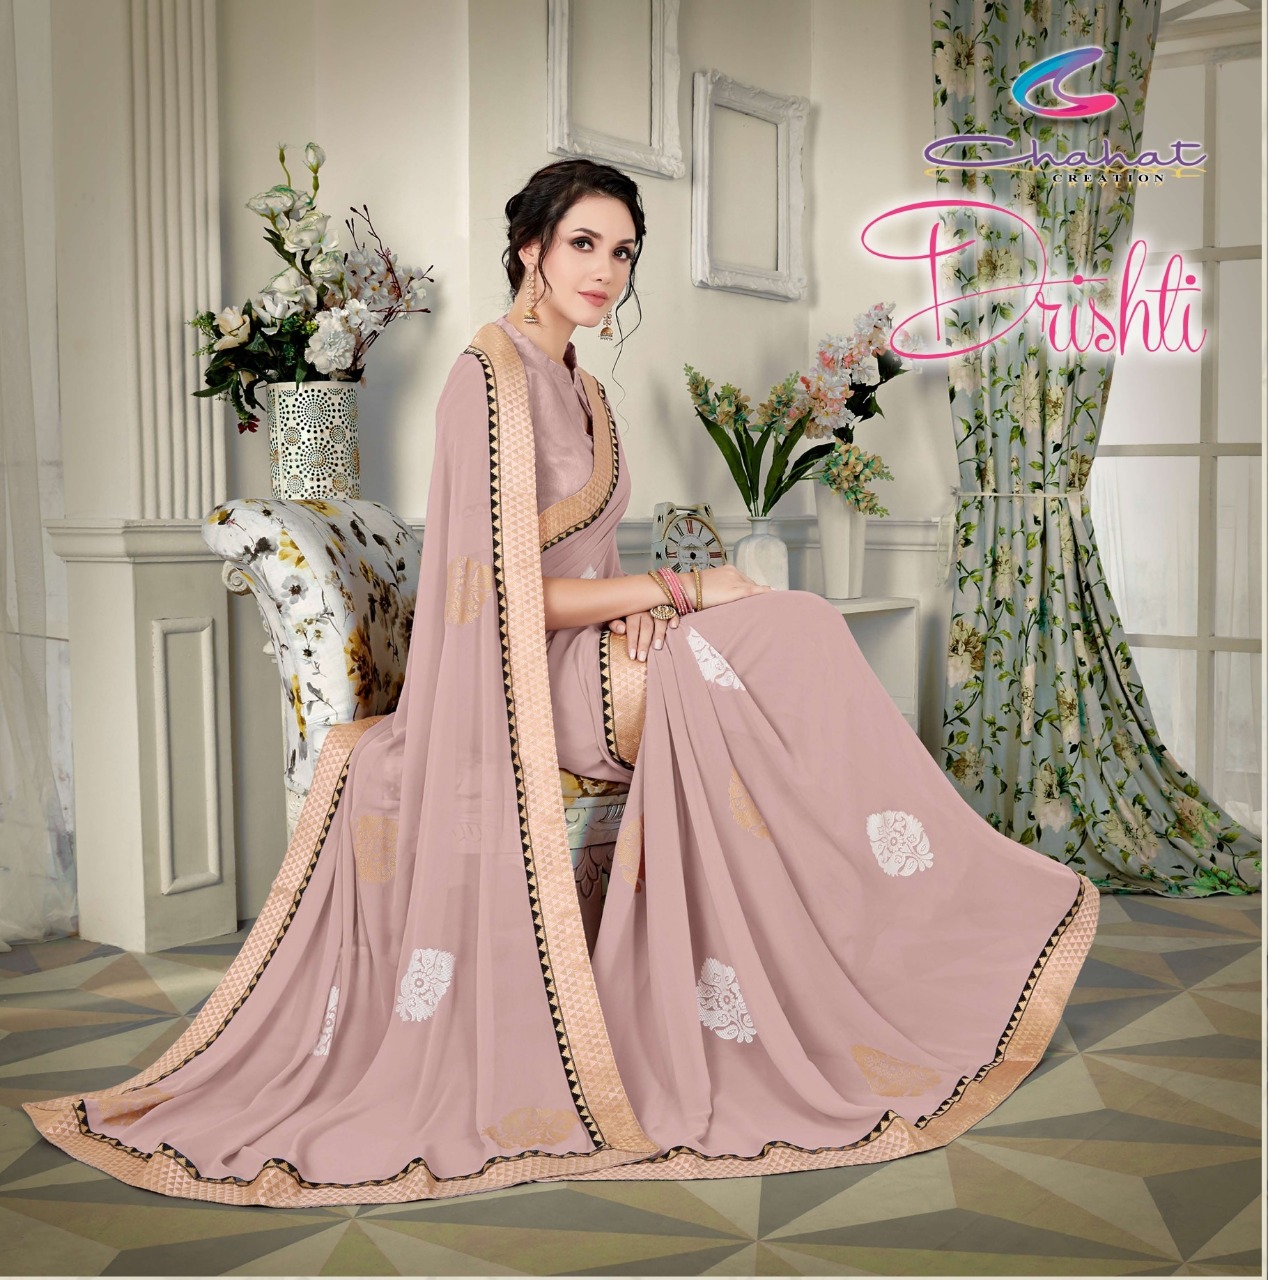 Chahat Drishti Casual Wear Ladies Saris Buy Online At Cheap Rates